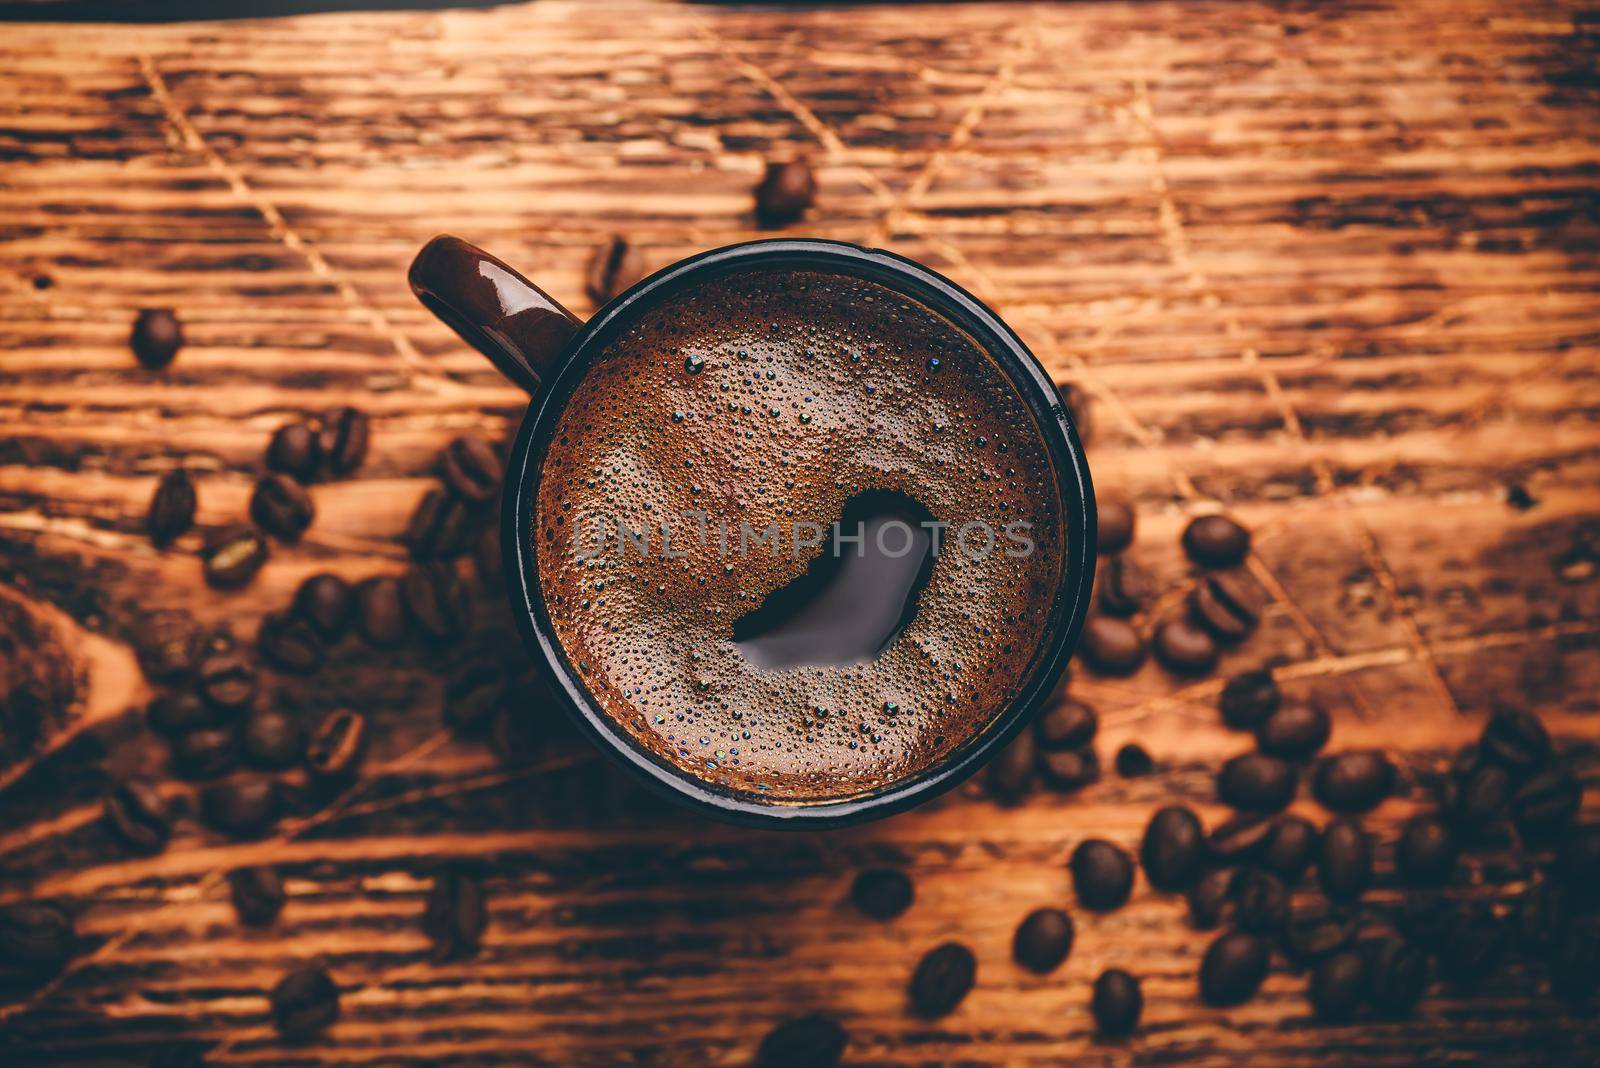 Brewed black coffee in metal mug over wooden surface